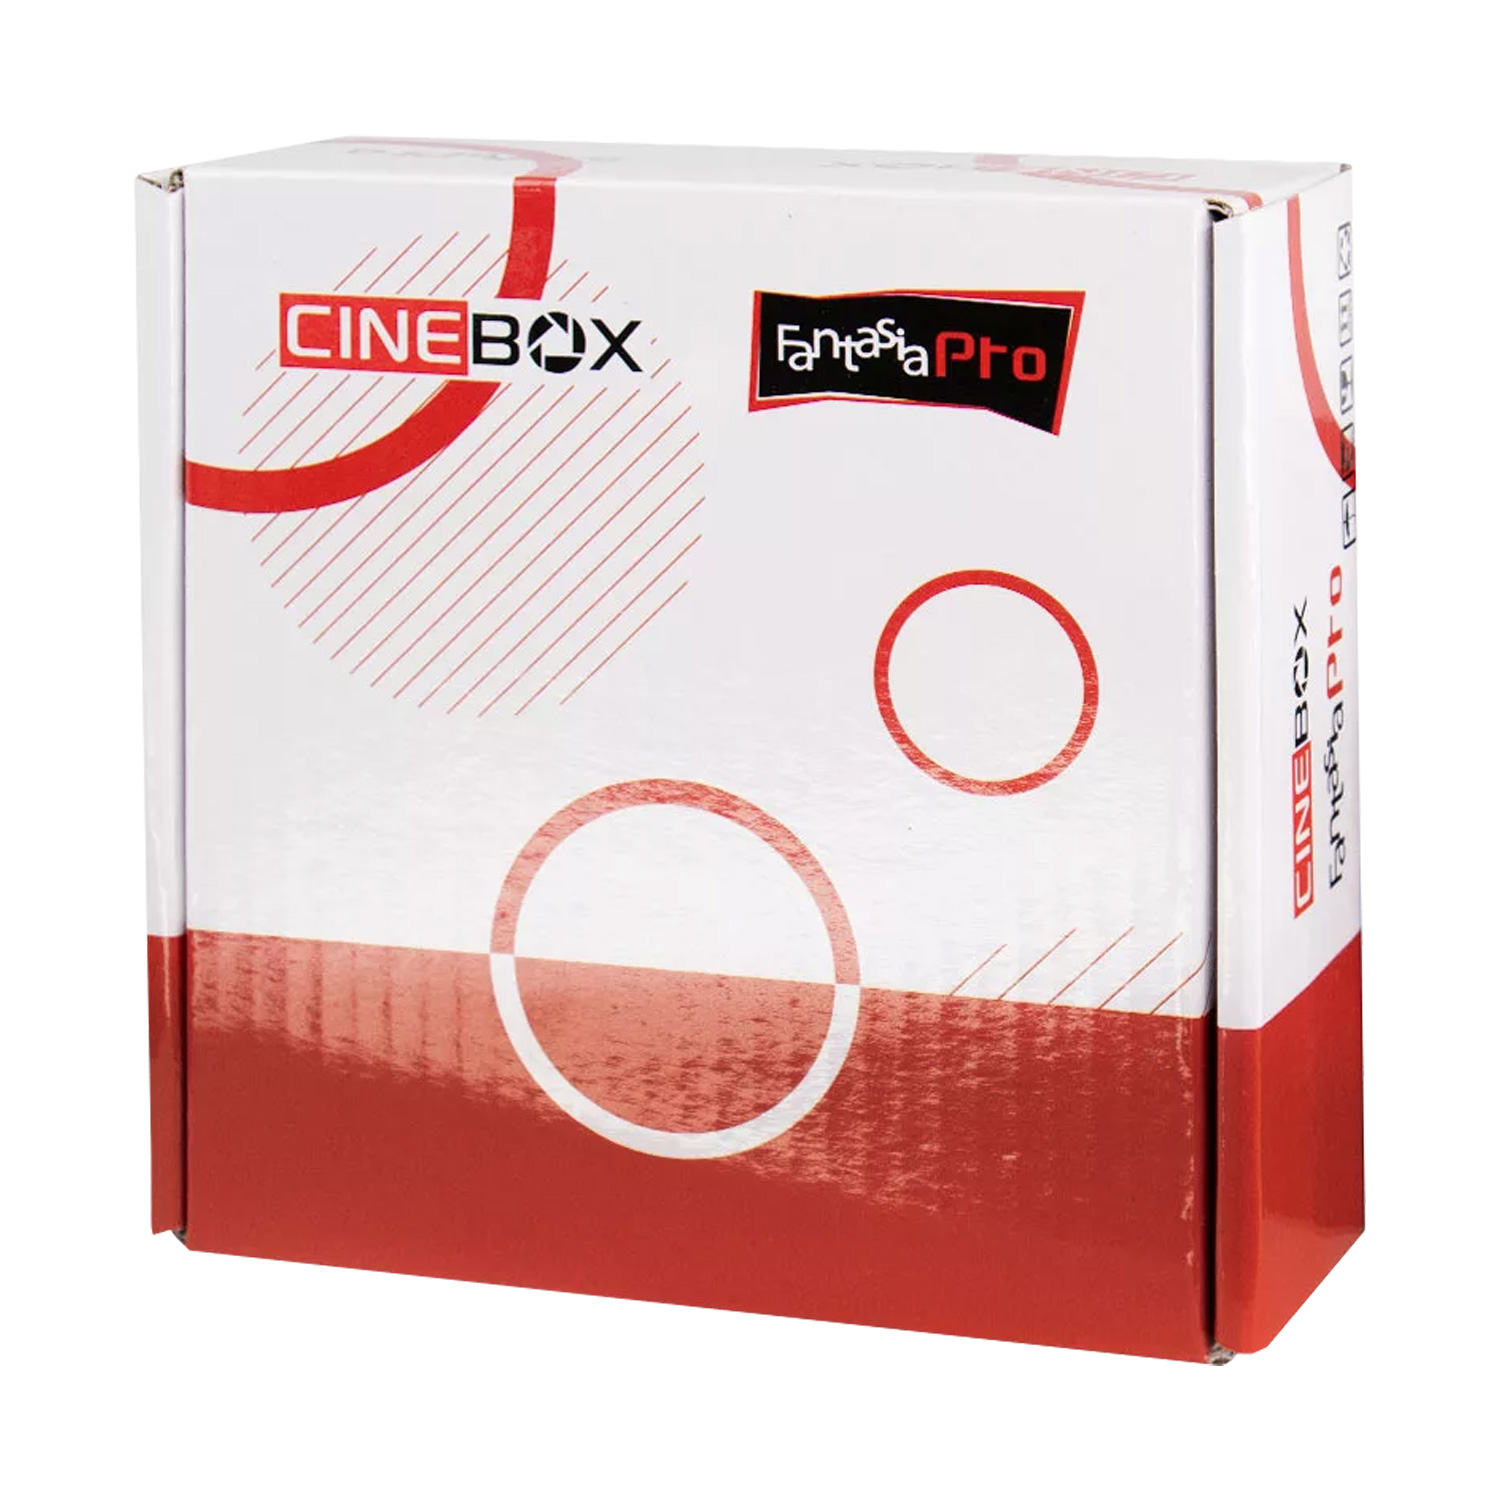 Receptor Cinebox Fantasia Pro Wi-Fi - Branco Vermelho